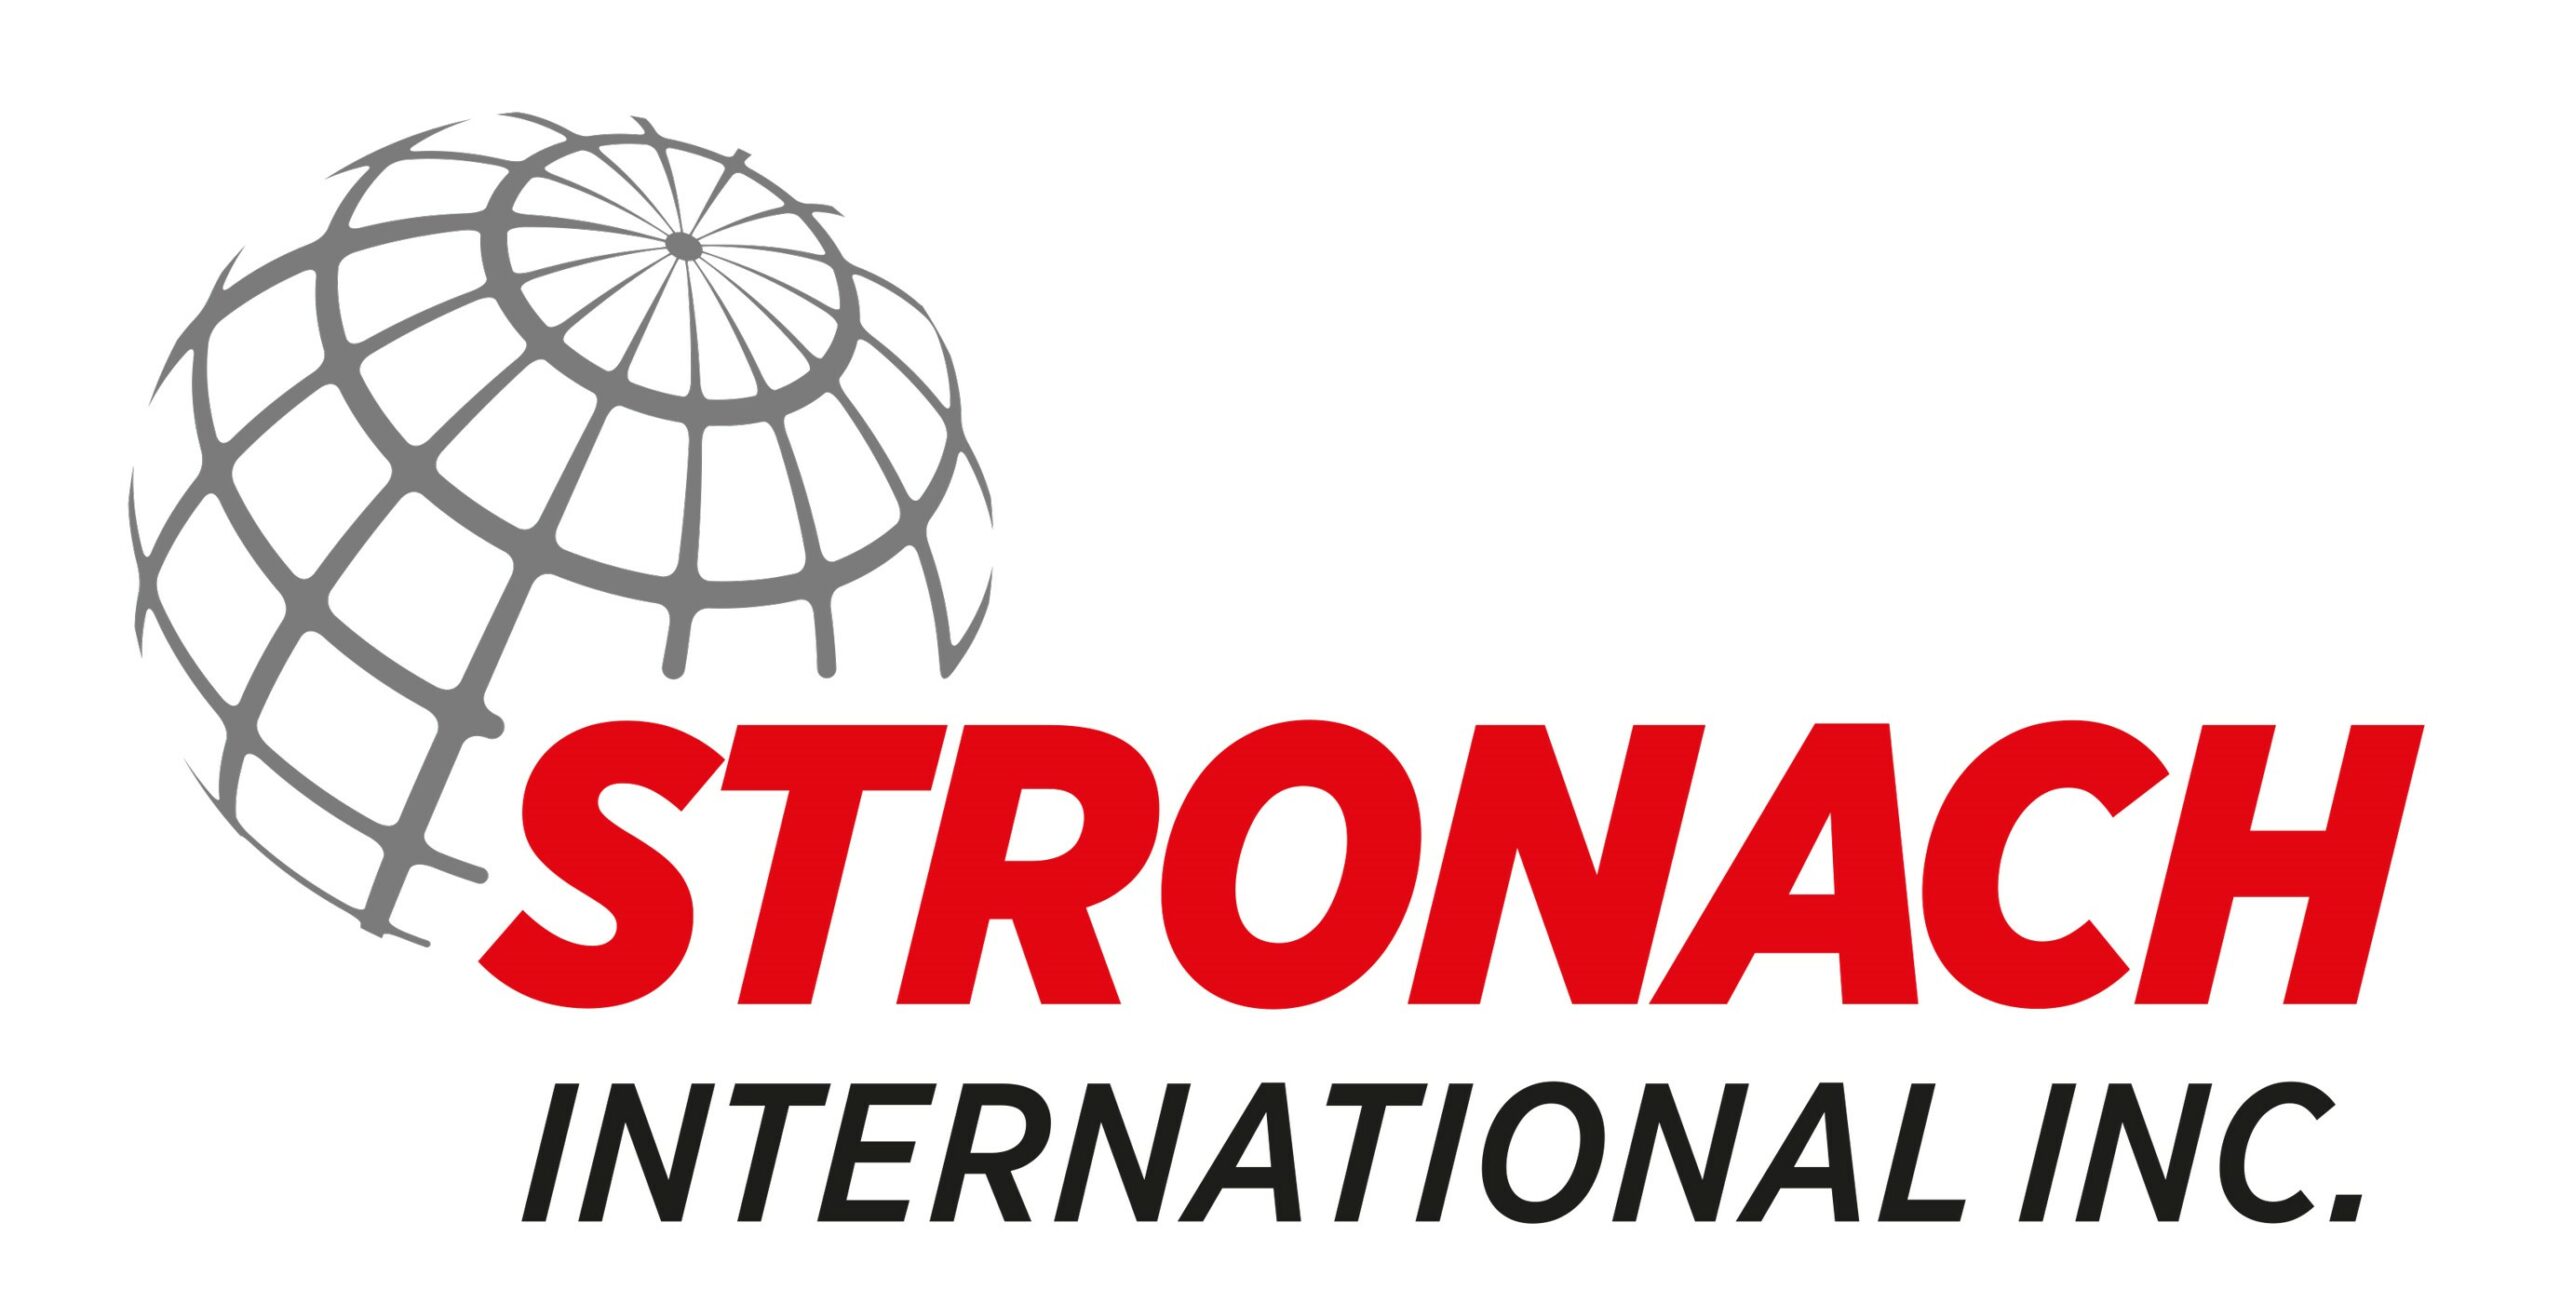 Stronach International logo